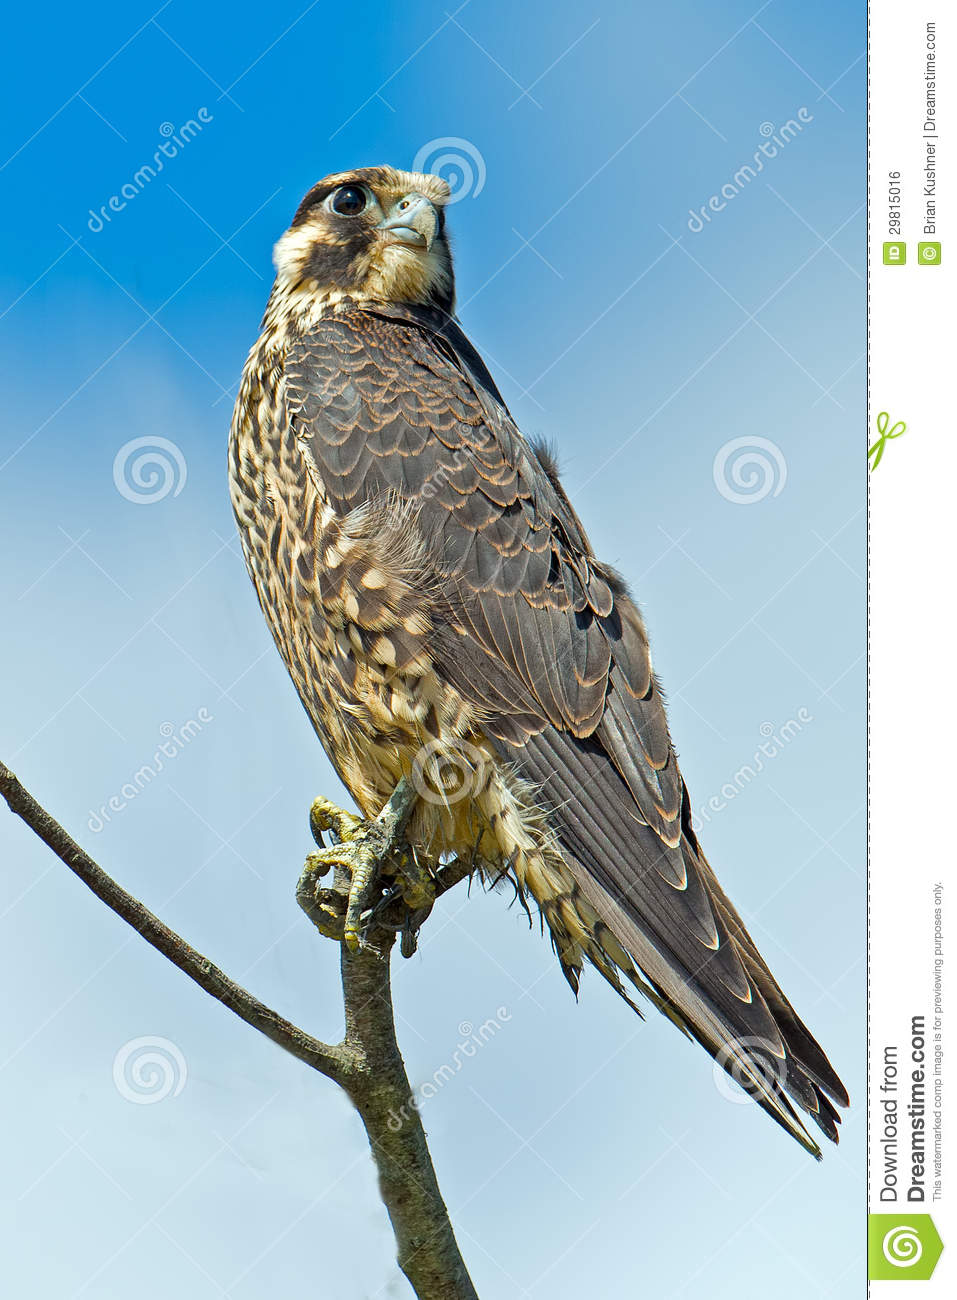 Peregrine Falcon Royalty Free Stock Image   Image  29815016